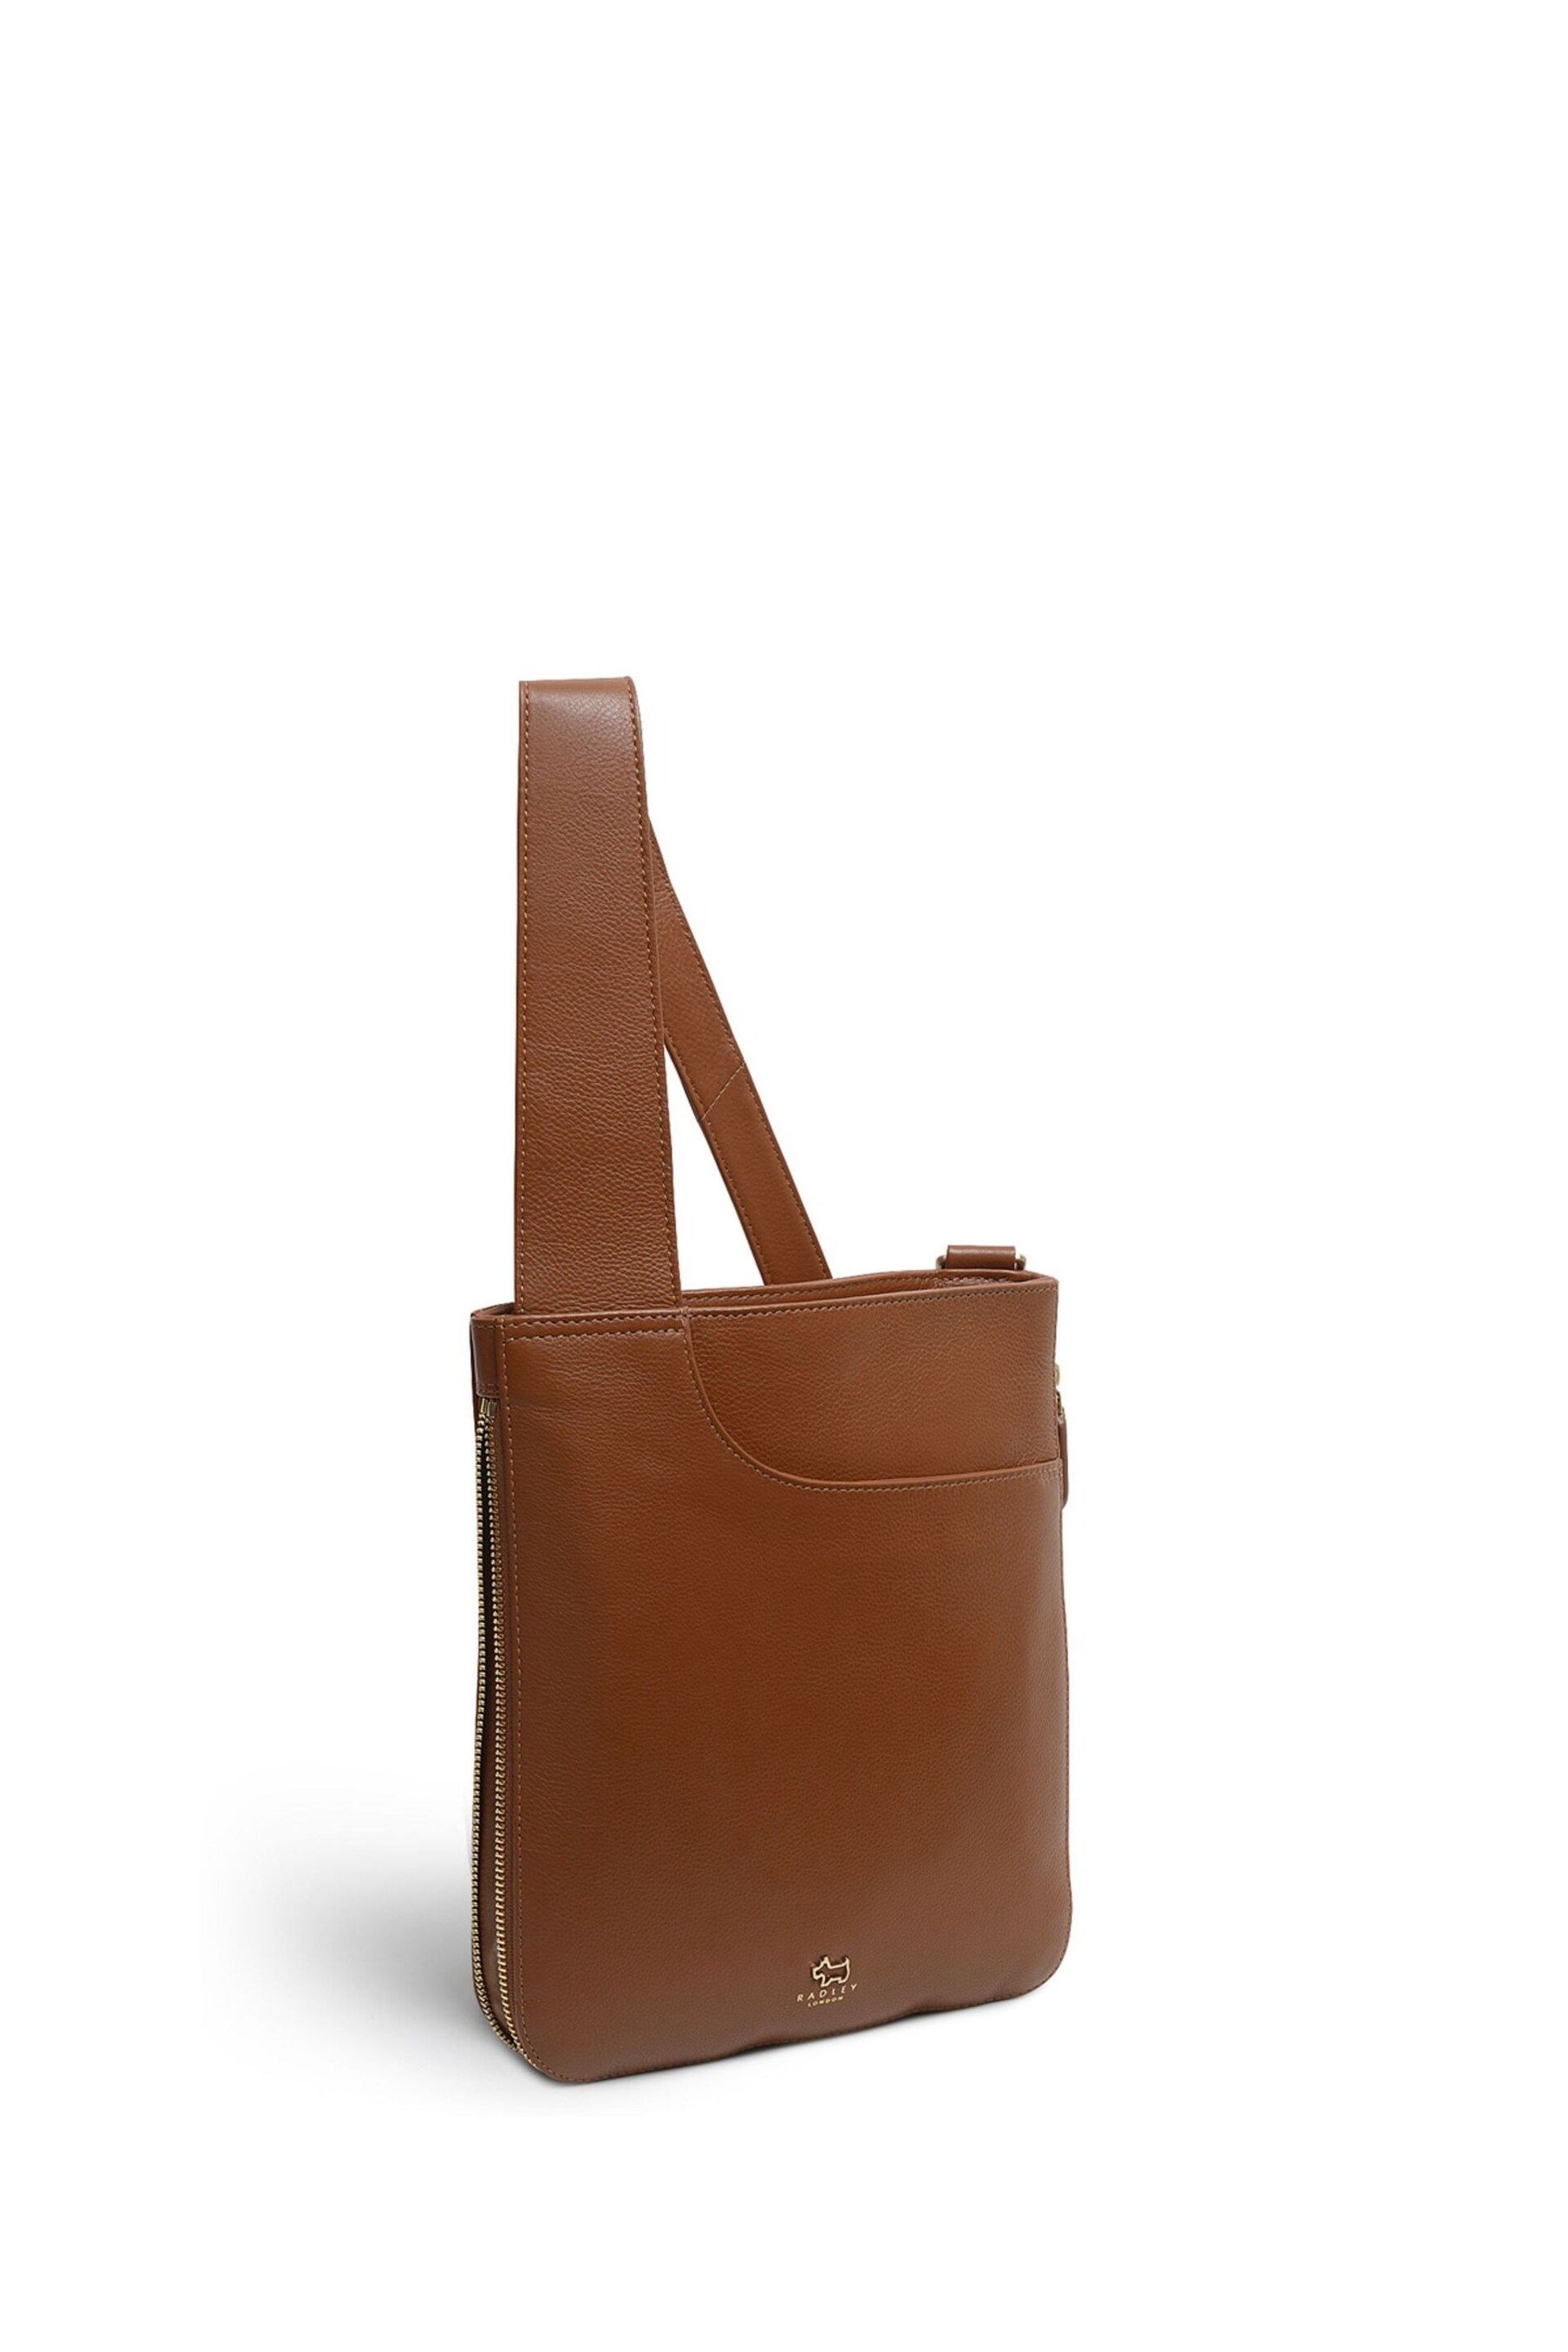 Radley London Medium Pockets Zip Around Cross-Body Brown Bag - Image 3 of 5